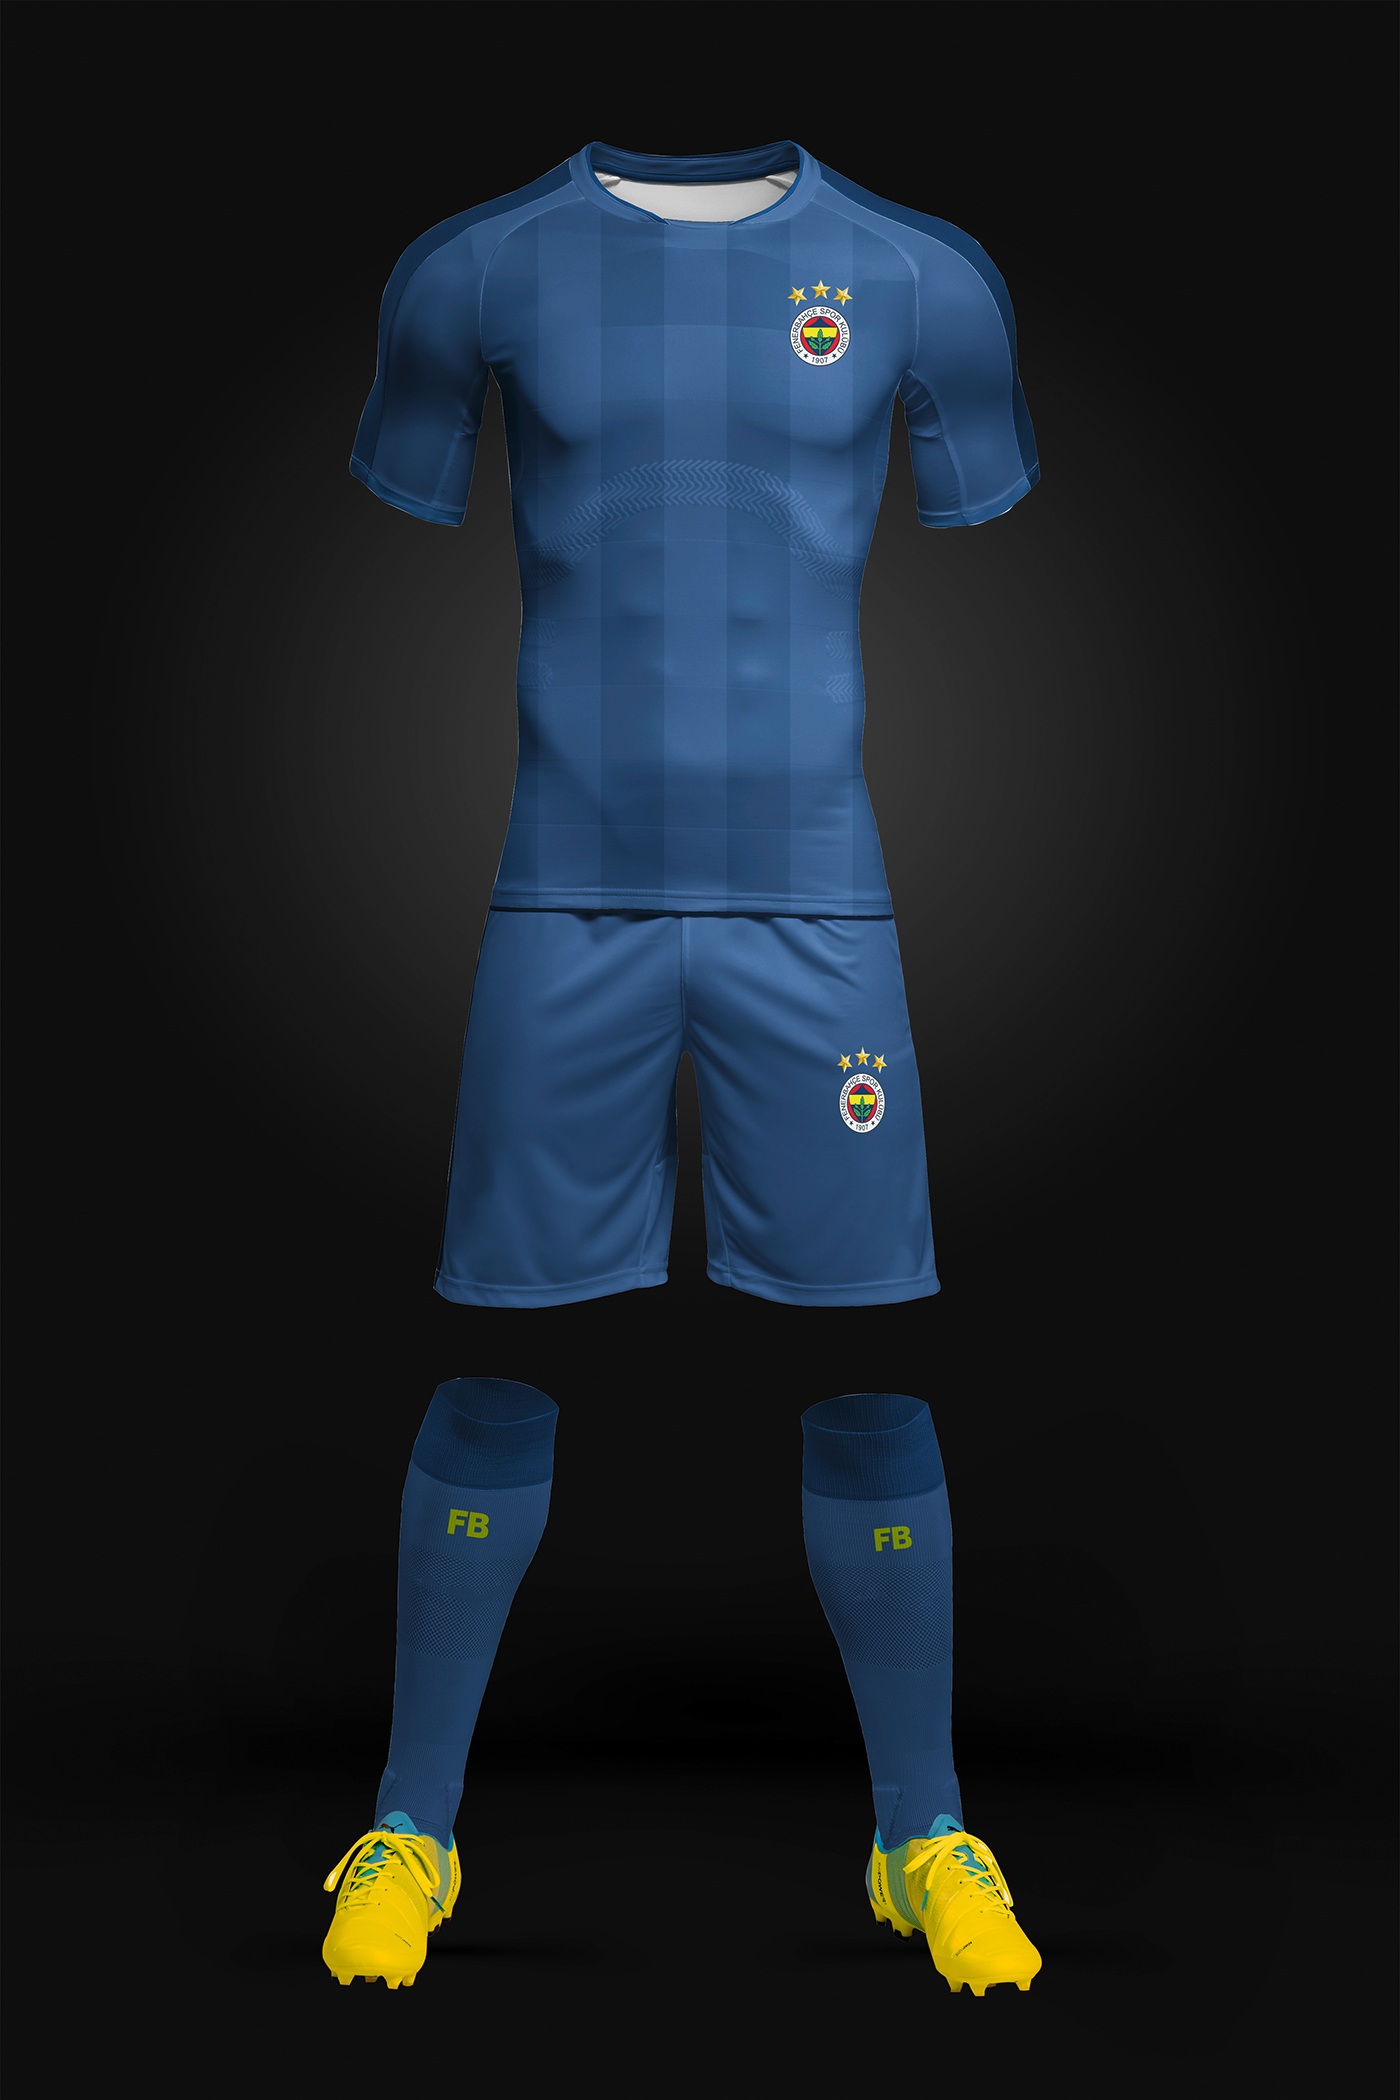 spor Futbol uniform textile design Fenerbahçe